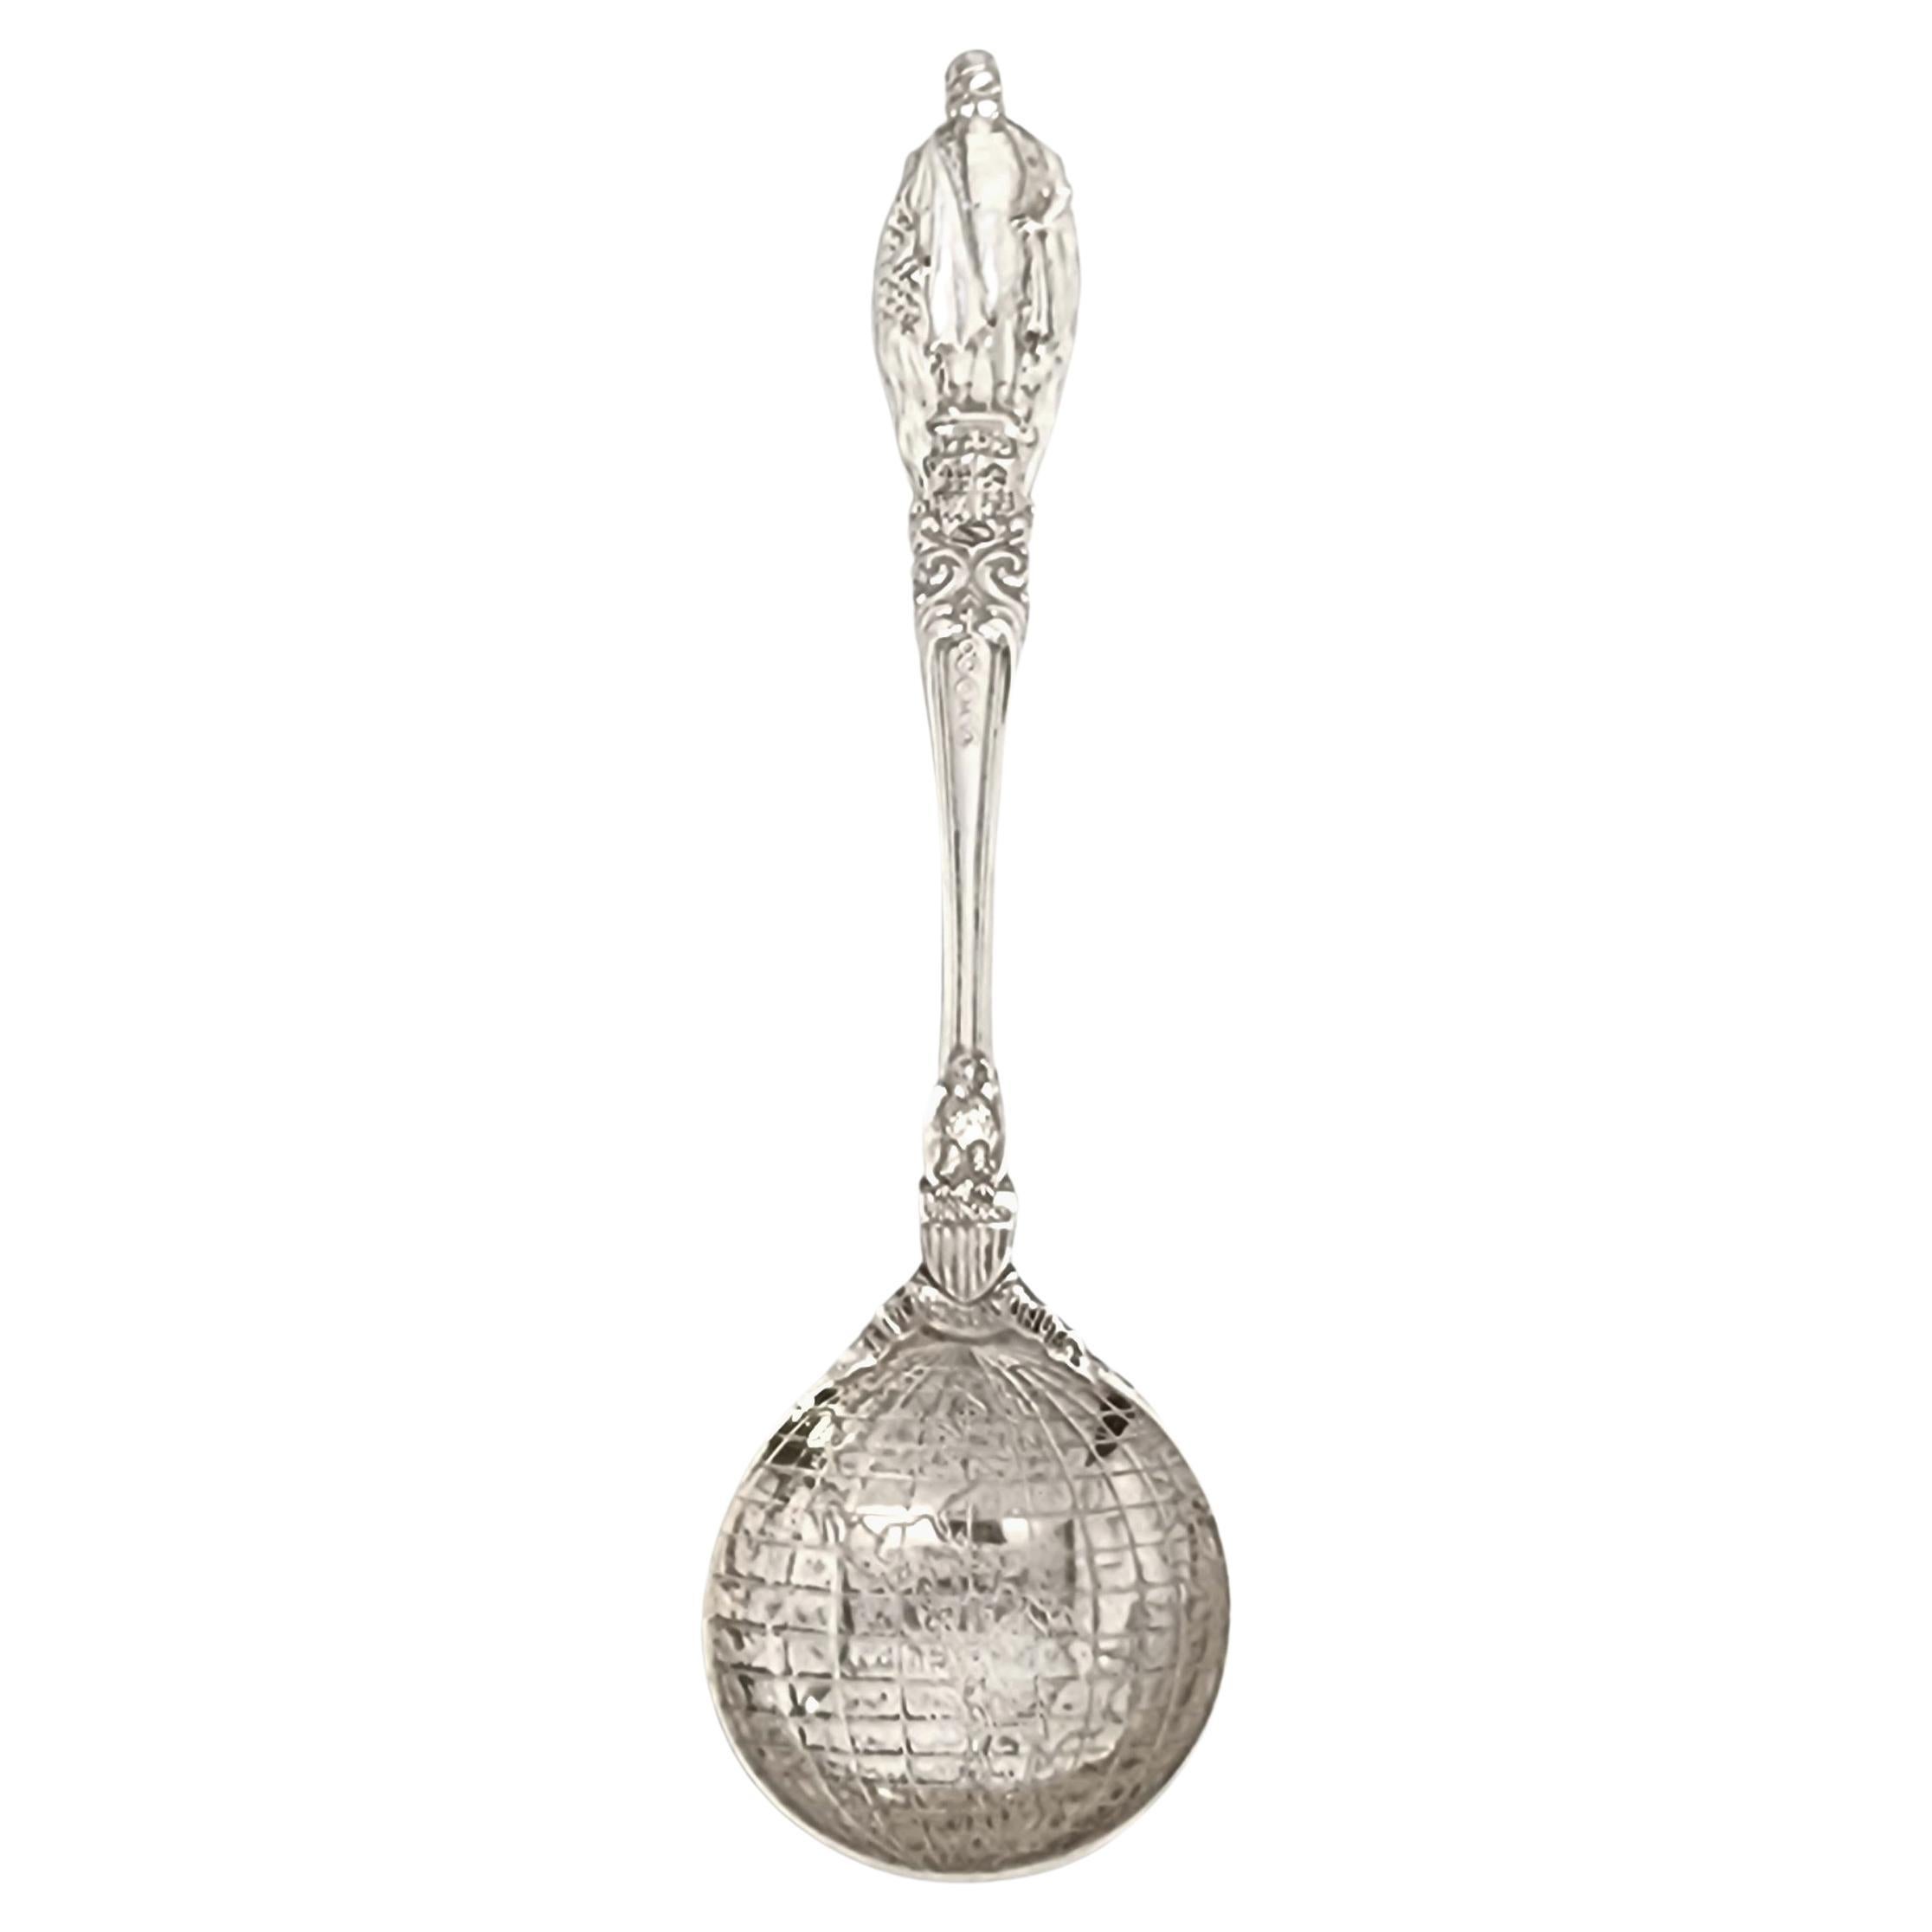 Tiffany & Co Sterling Christopher Columbus Globe Bowl Souvenir Spoon #14890 For Sale